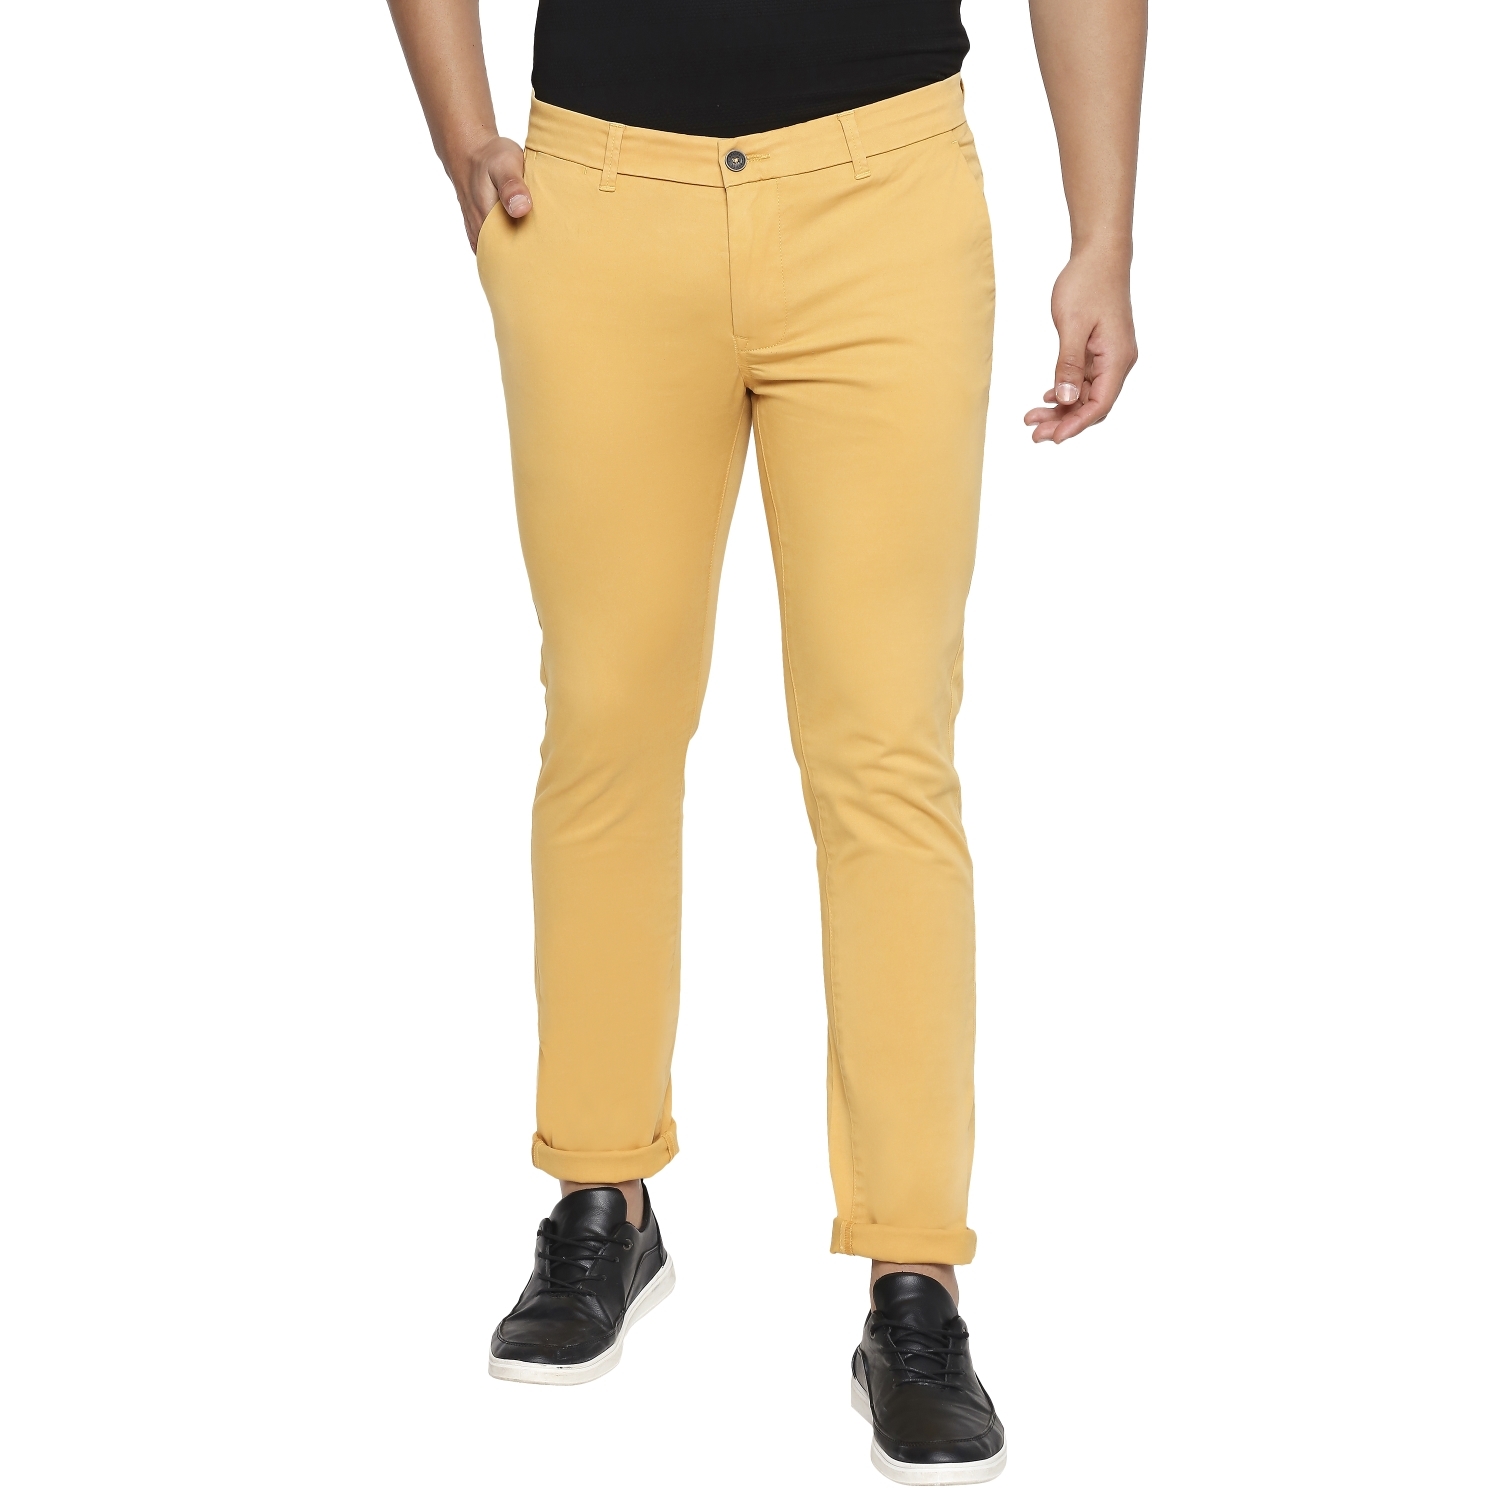 Basics | Basics Tapered Fit Golden Orange Over Dyed Stretch Trouser